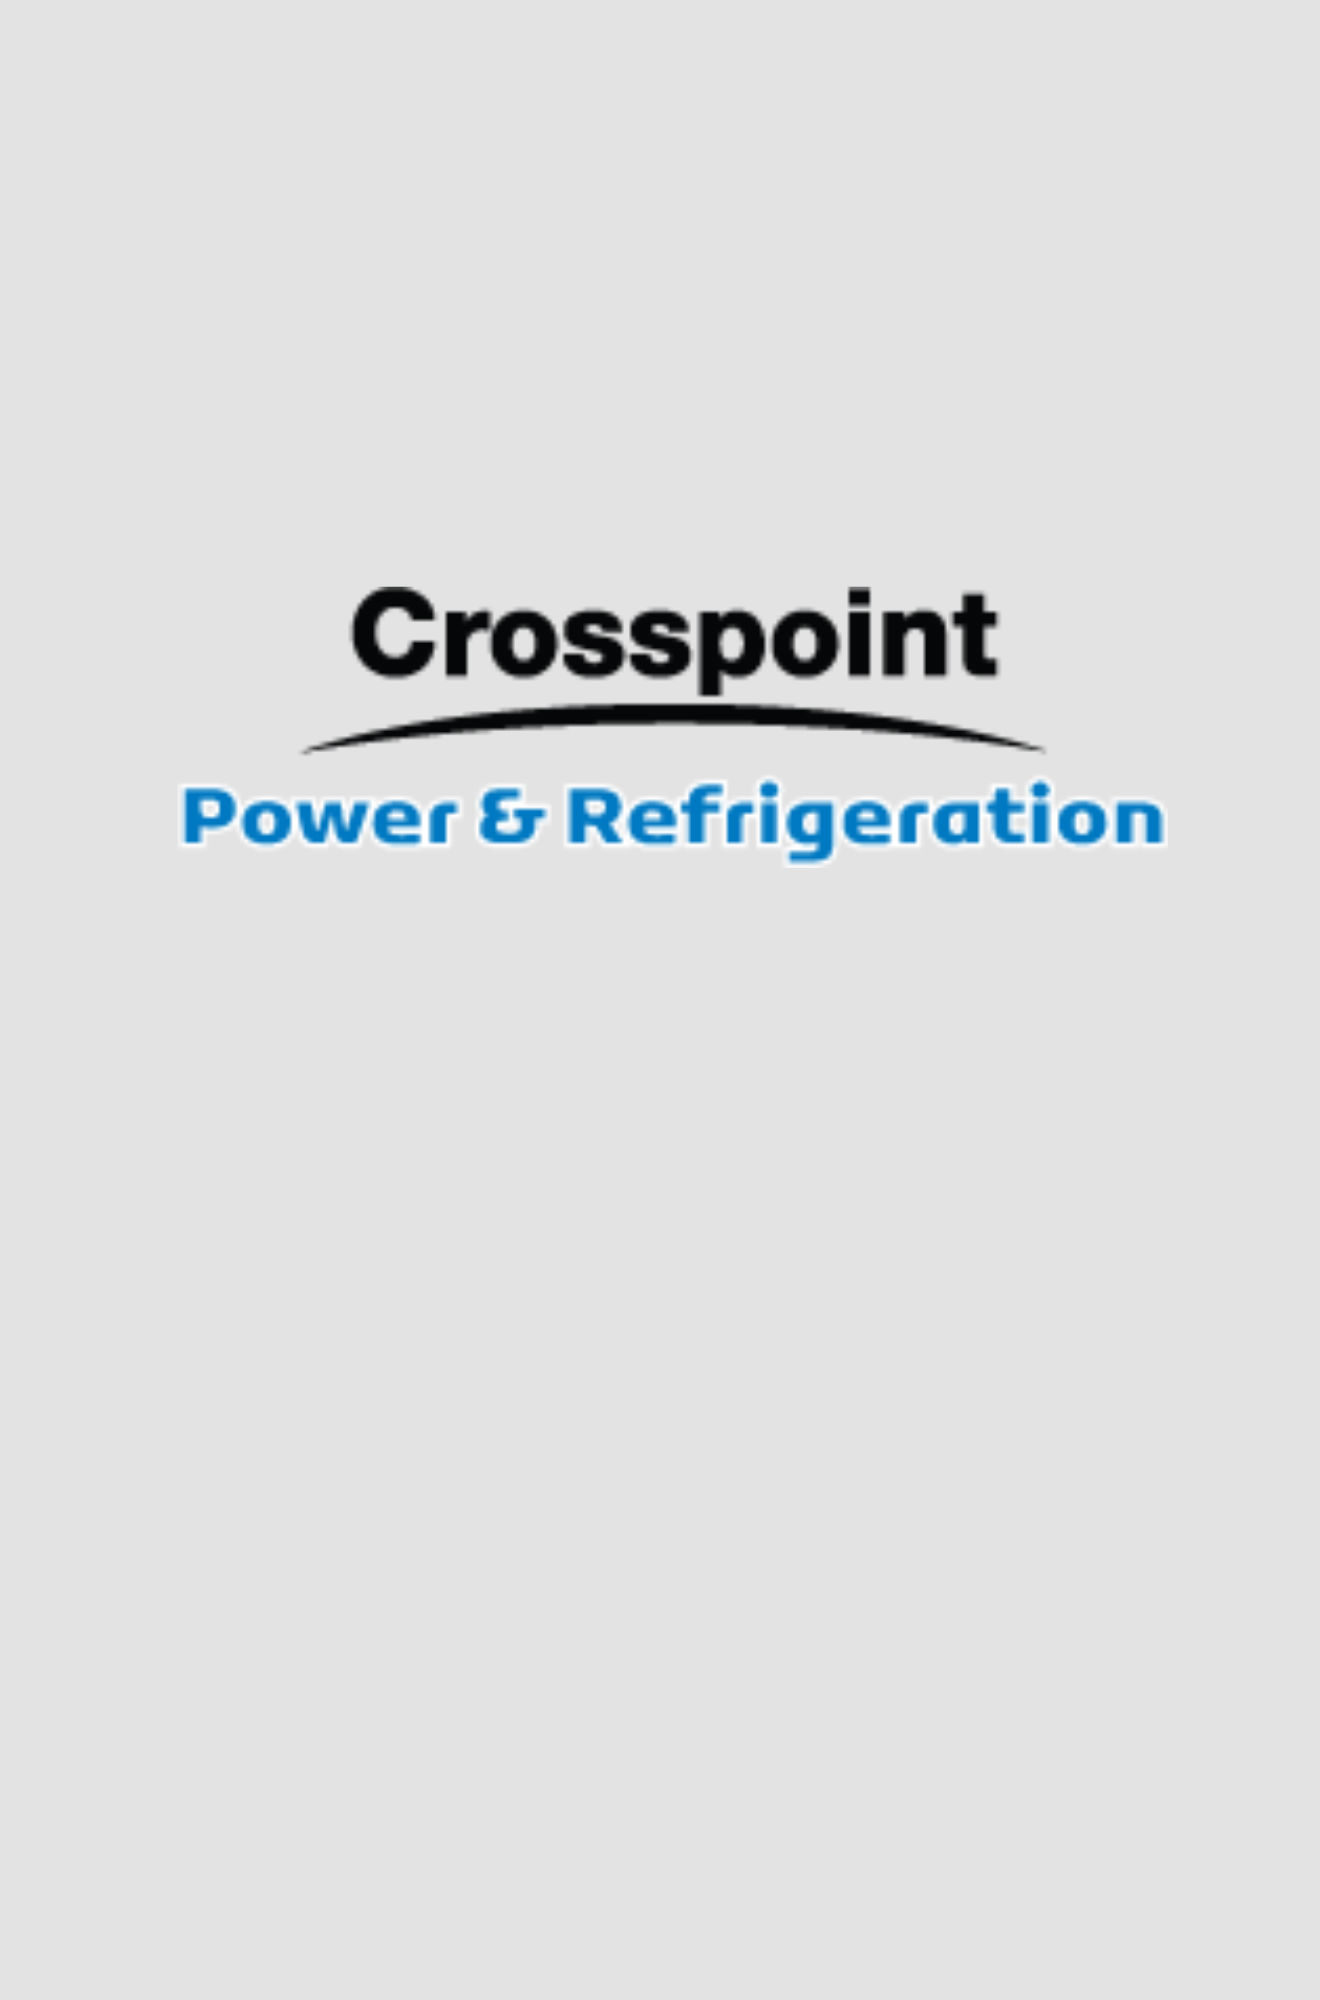 Crosspoint Power & Refrigeration logo